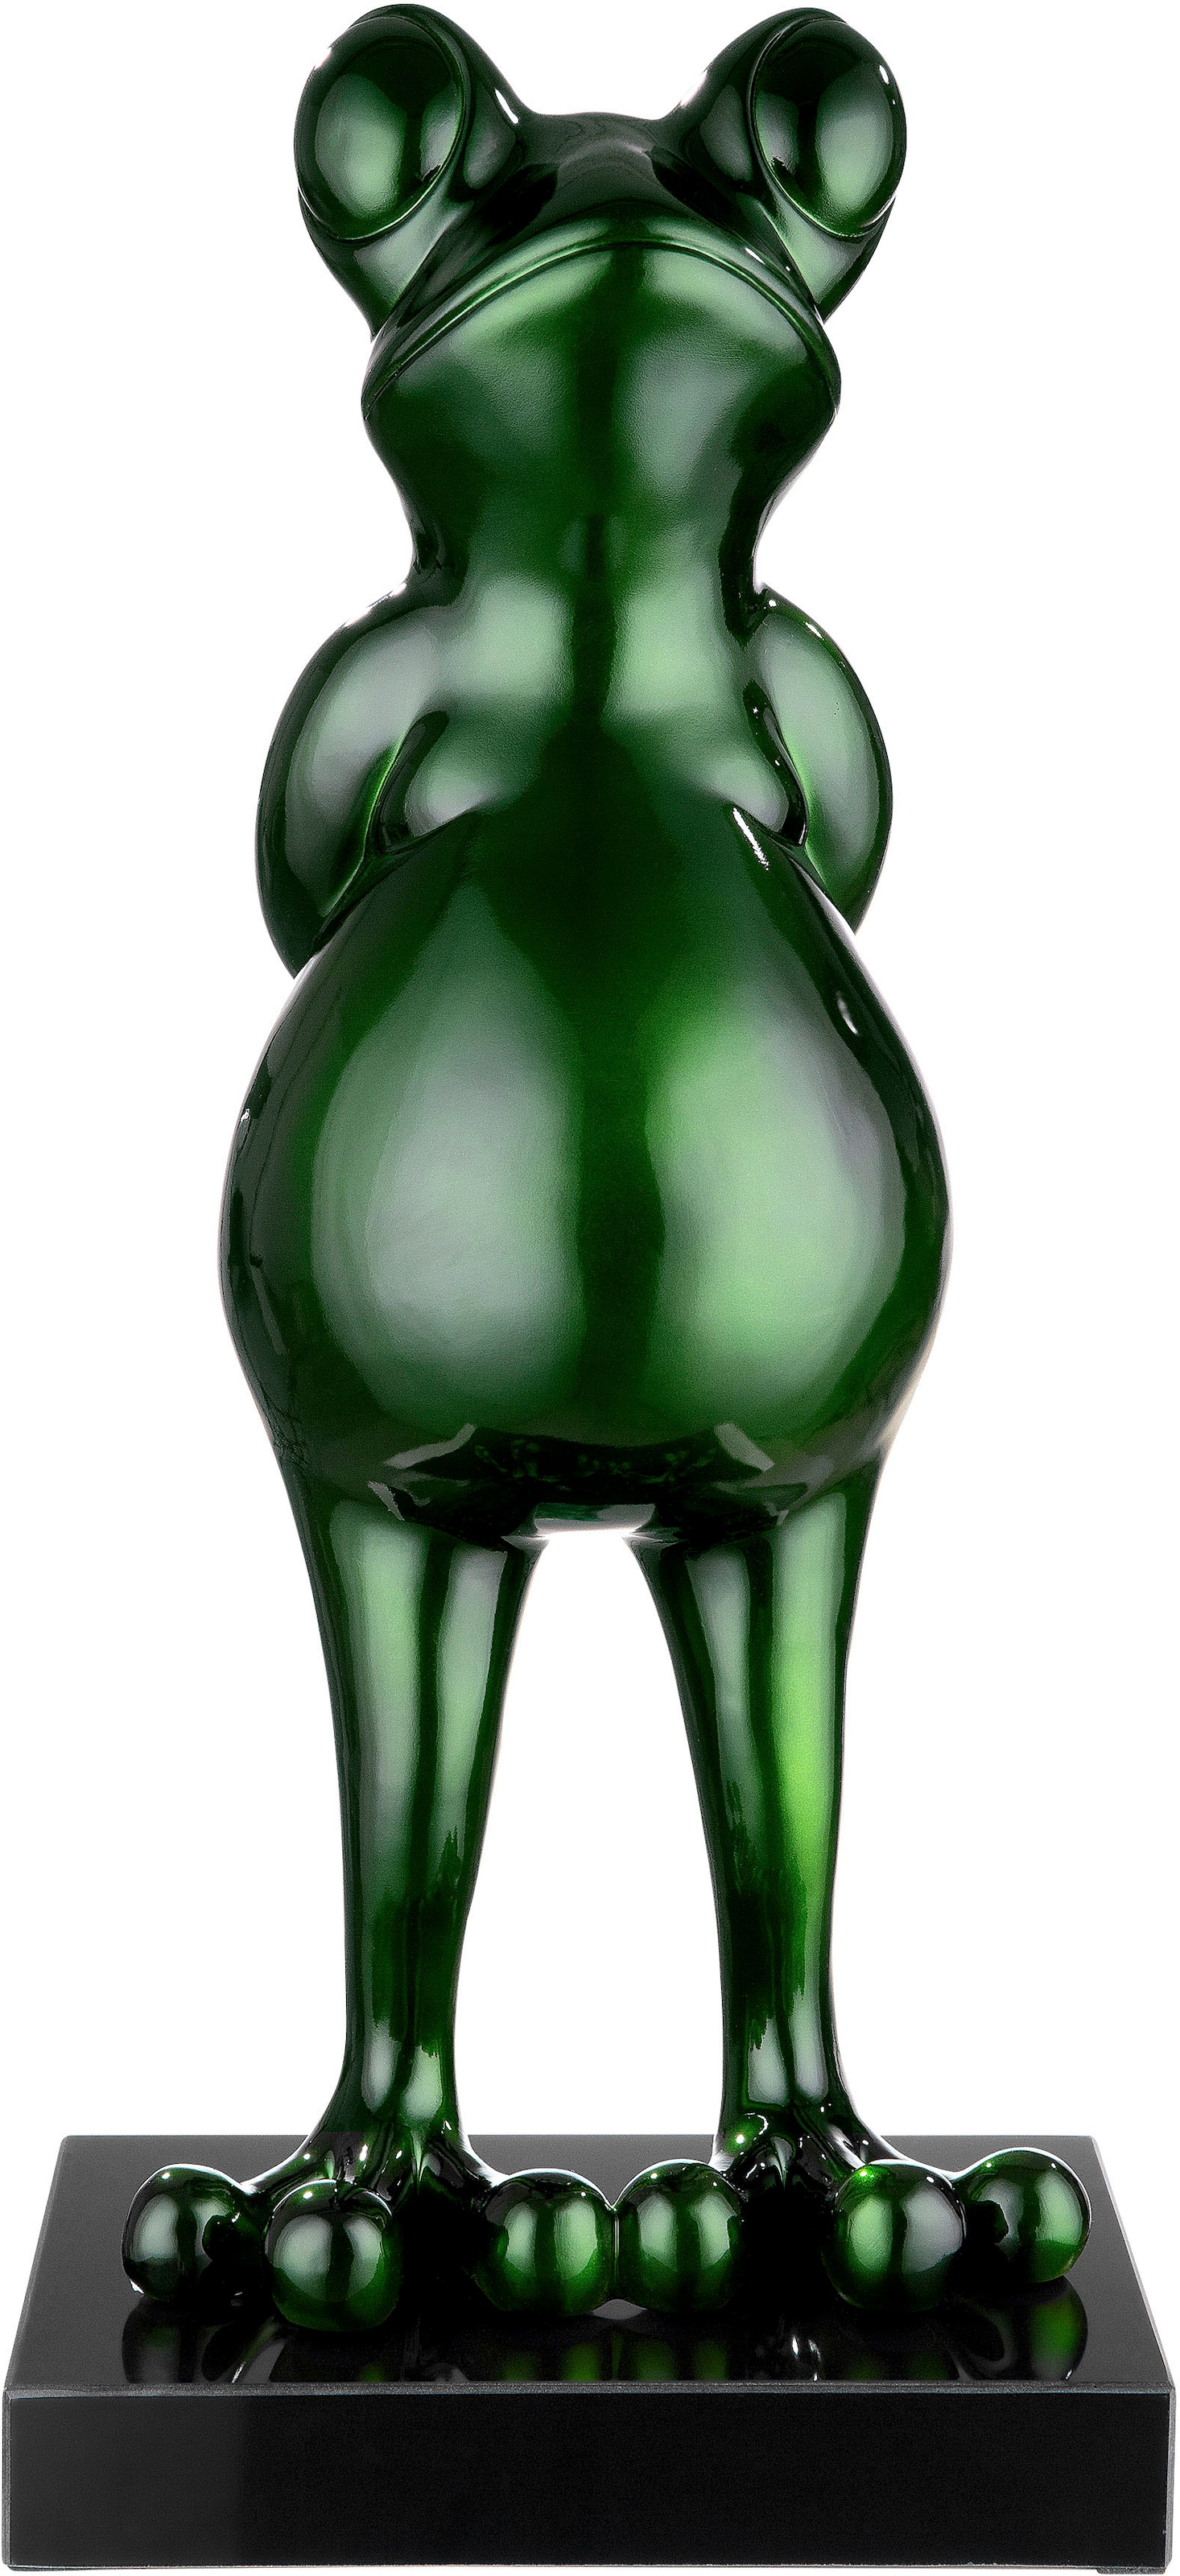 by Marmorbase kaufen auf Casablanca Gilde Frog«, »Skulptur Tierfigur